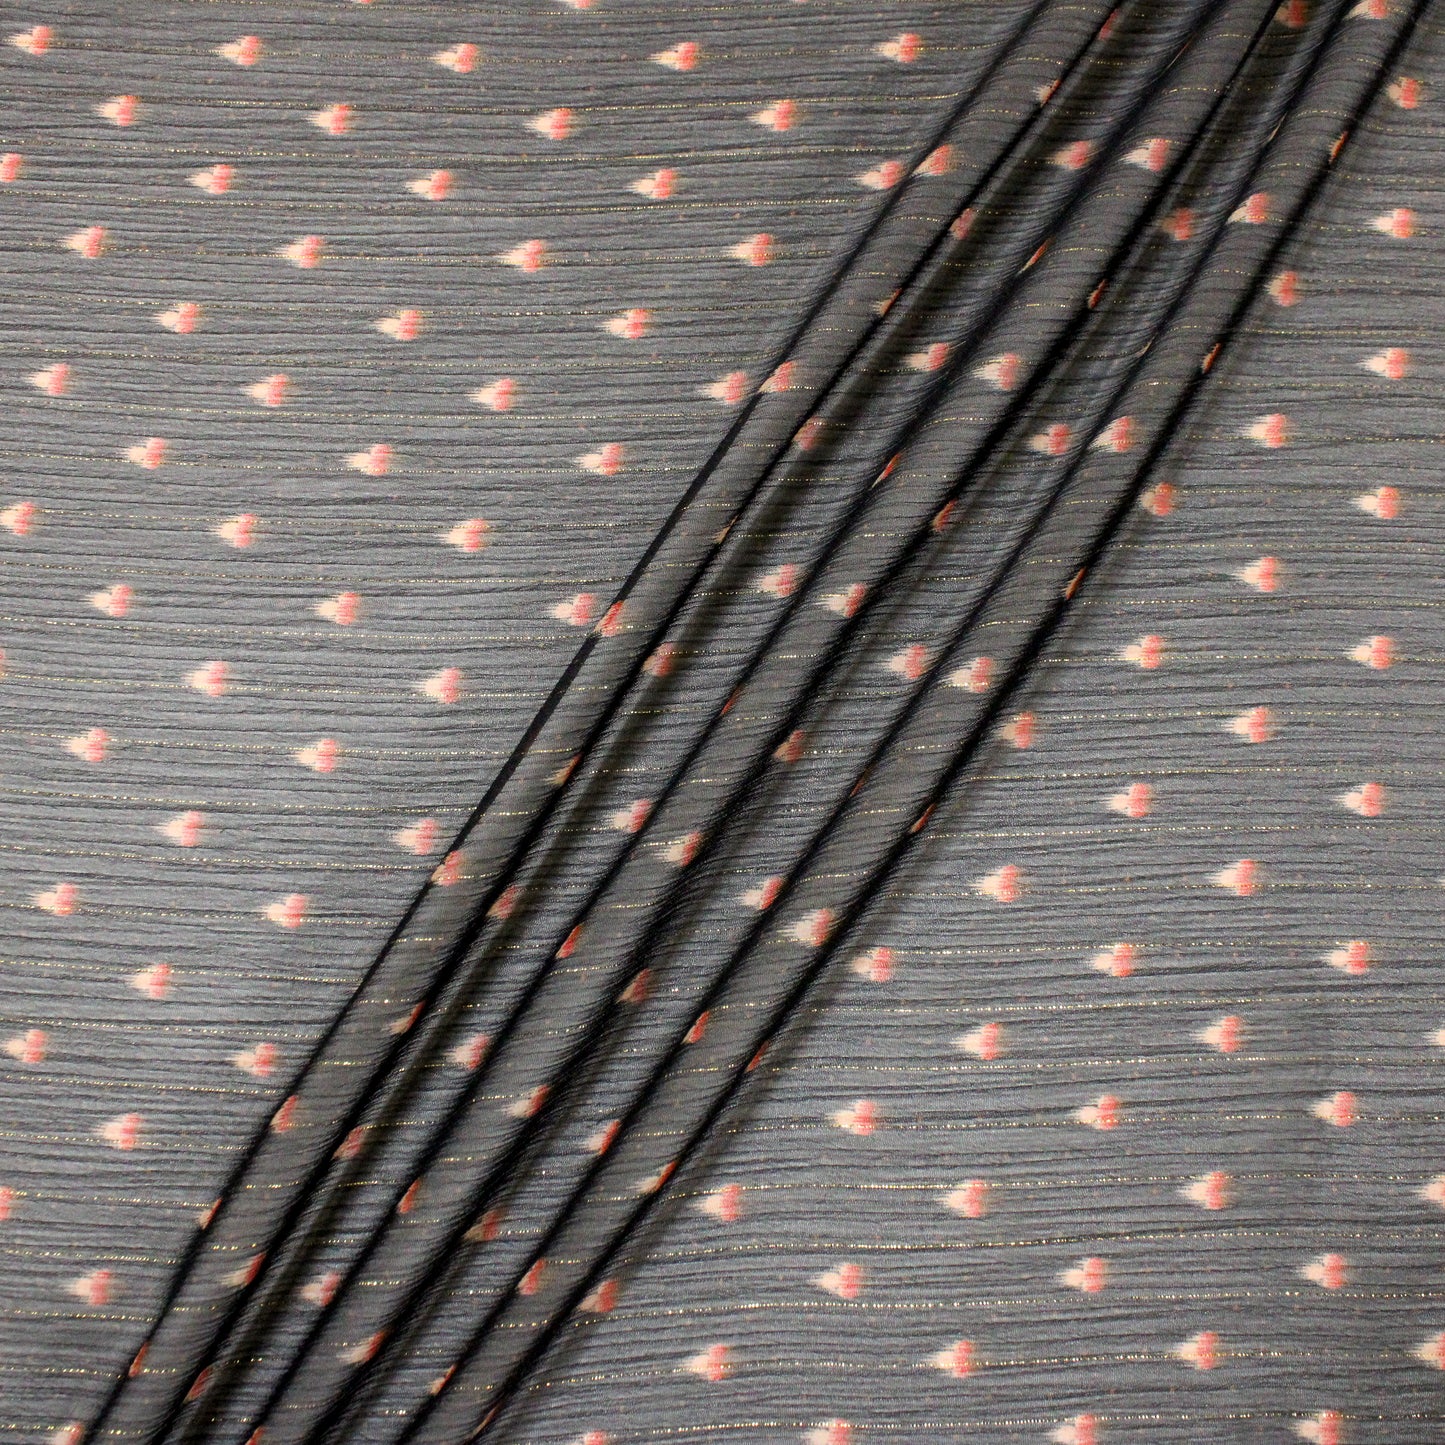 birds eye view of fabric with three ripples running diagonally